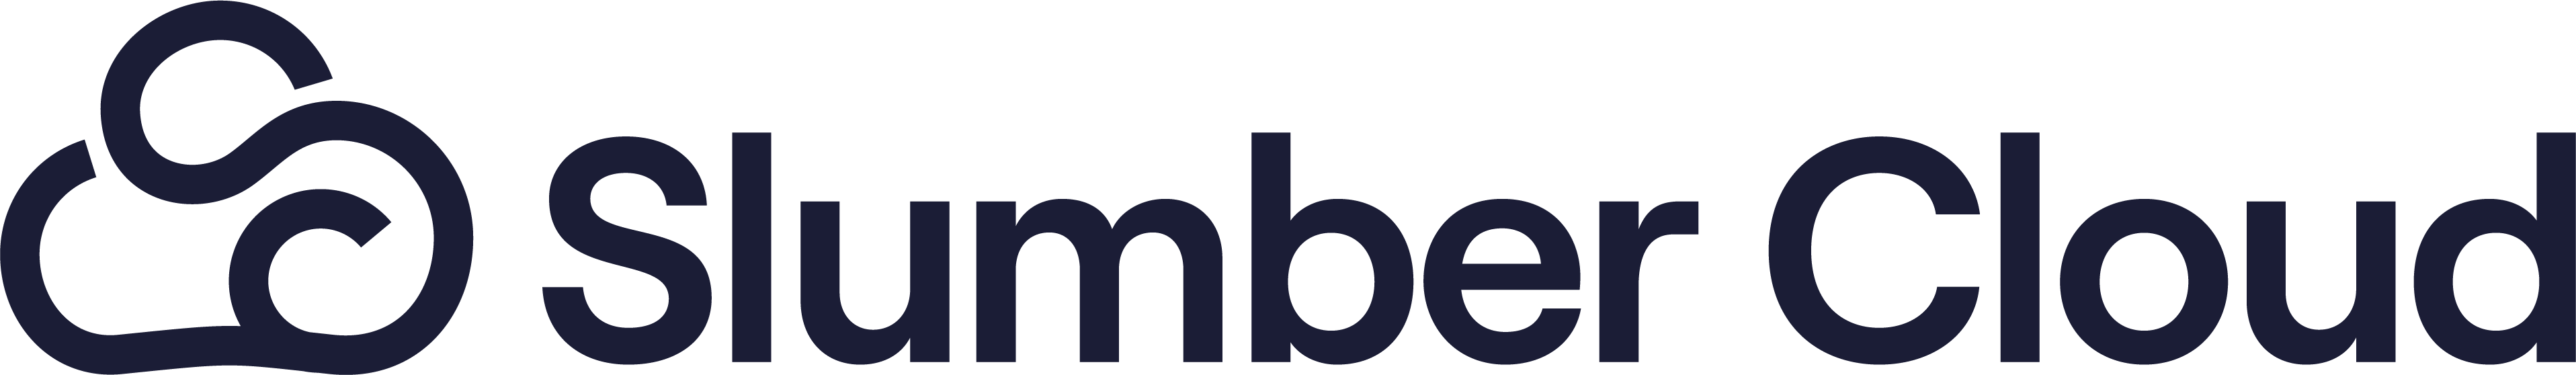 Slumber Cloud Logo